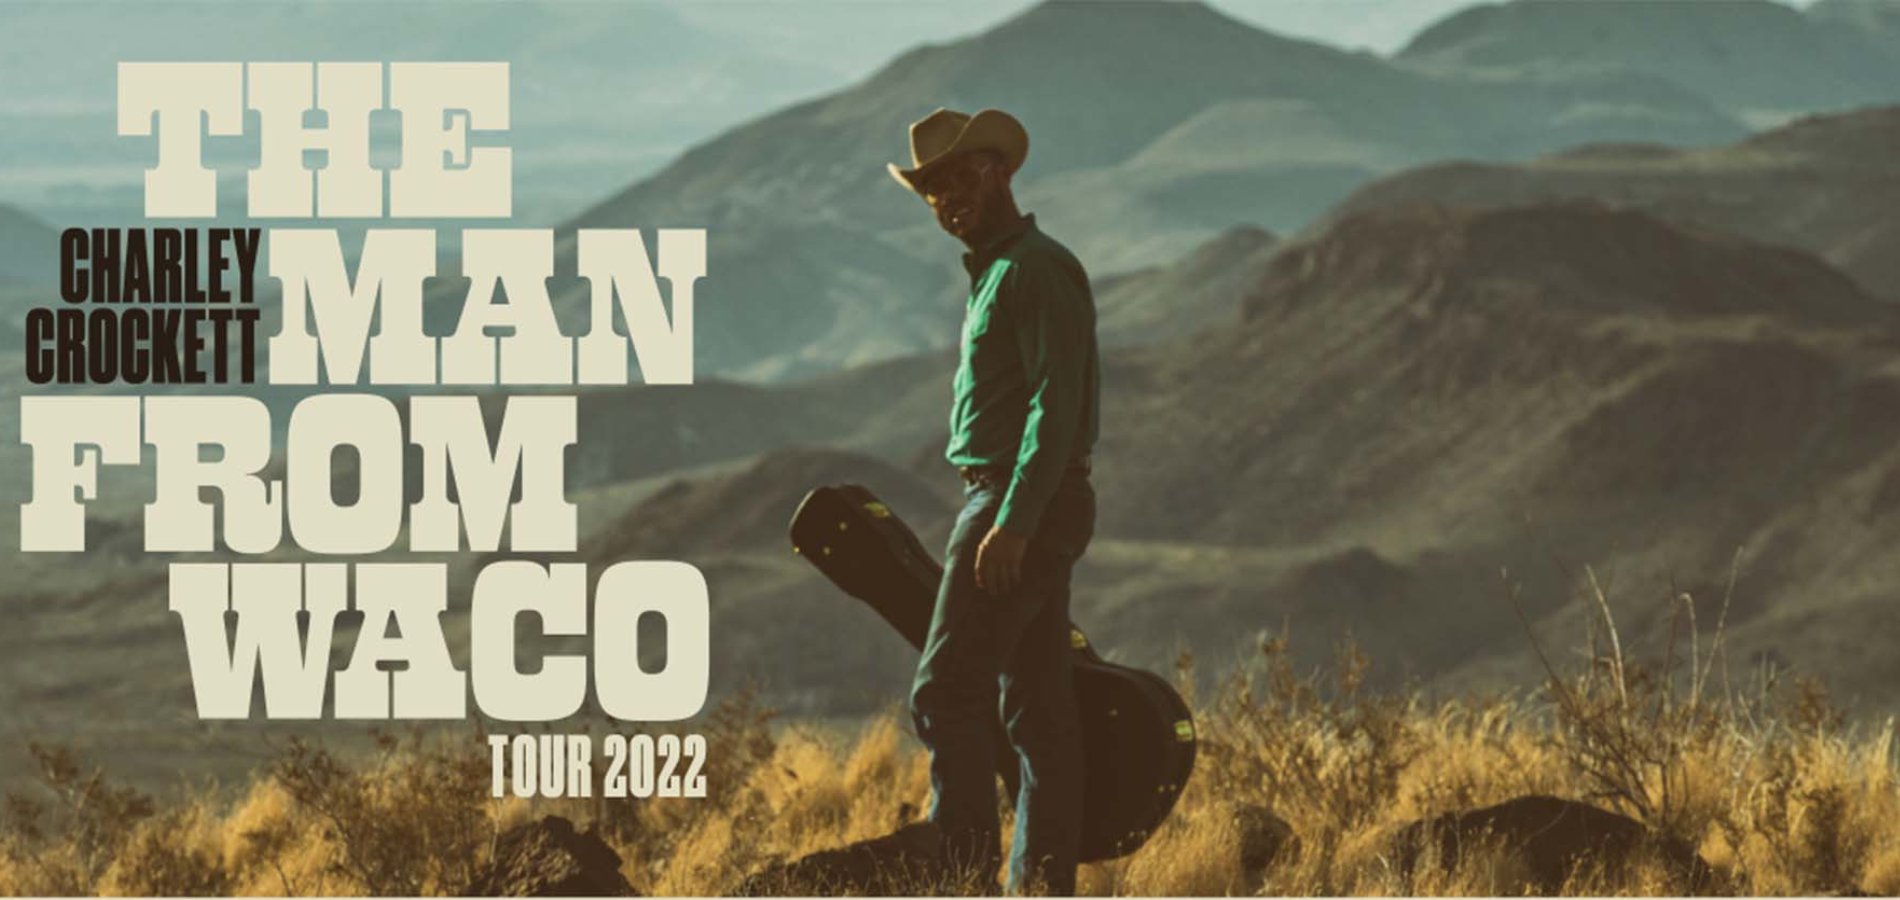 Charley Crockett’s Fall 2022 The Man from Waco Tour